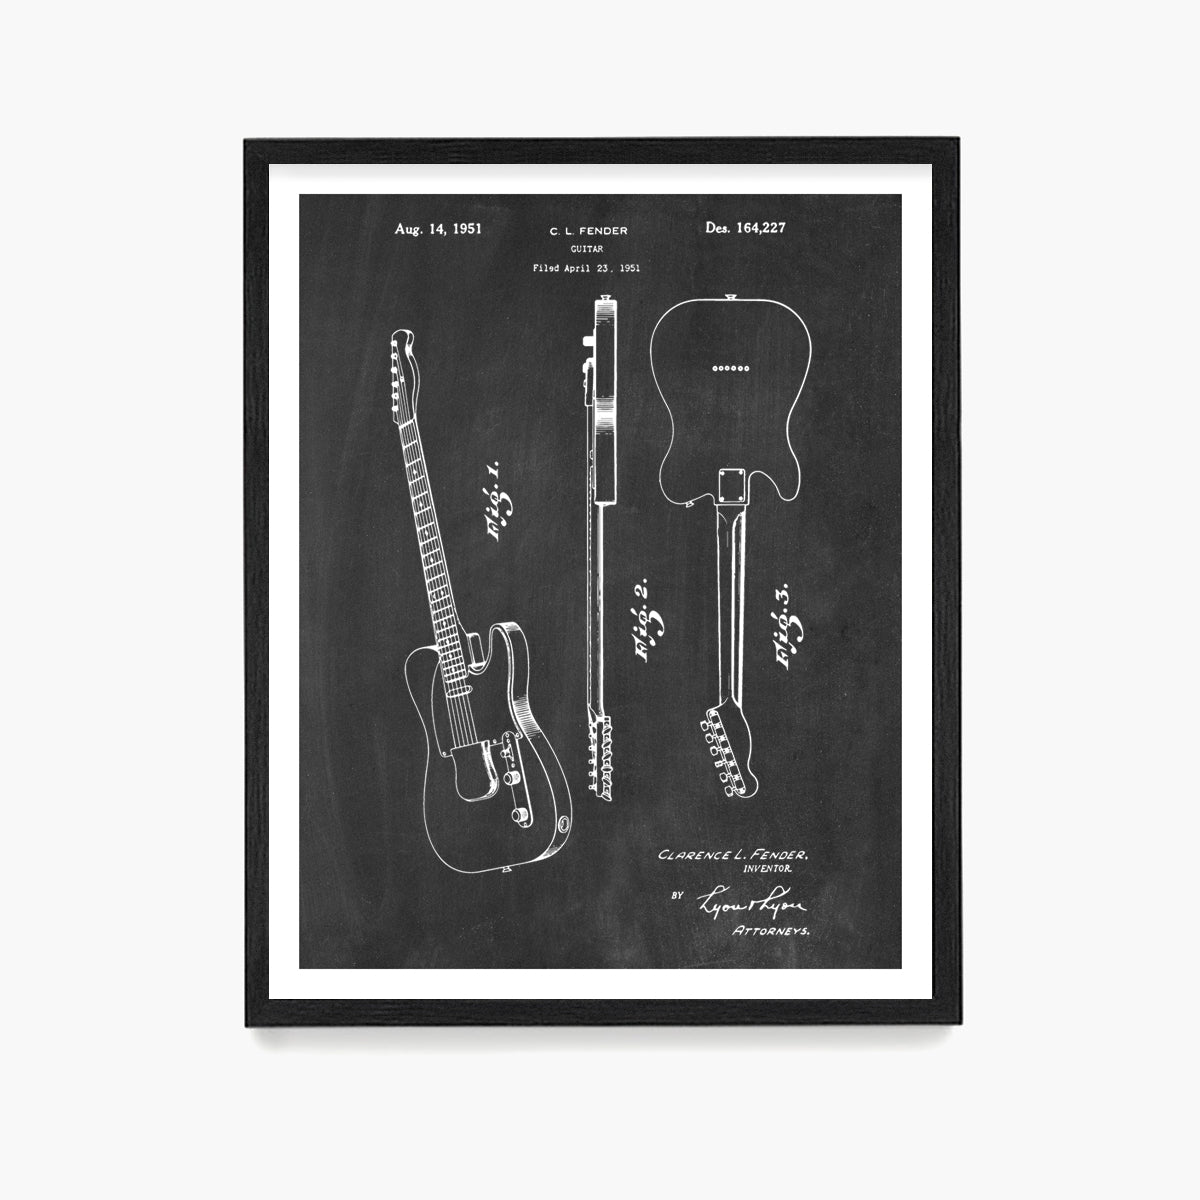 Fender Telecaster Guitar Patent Poster, Guitar Patent Wall Art